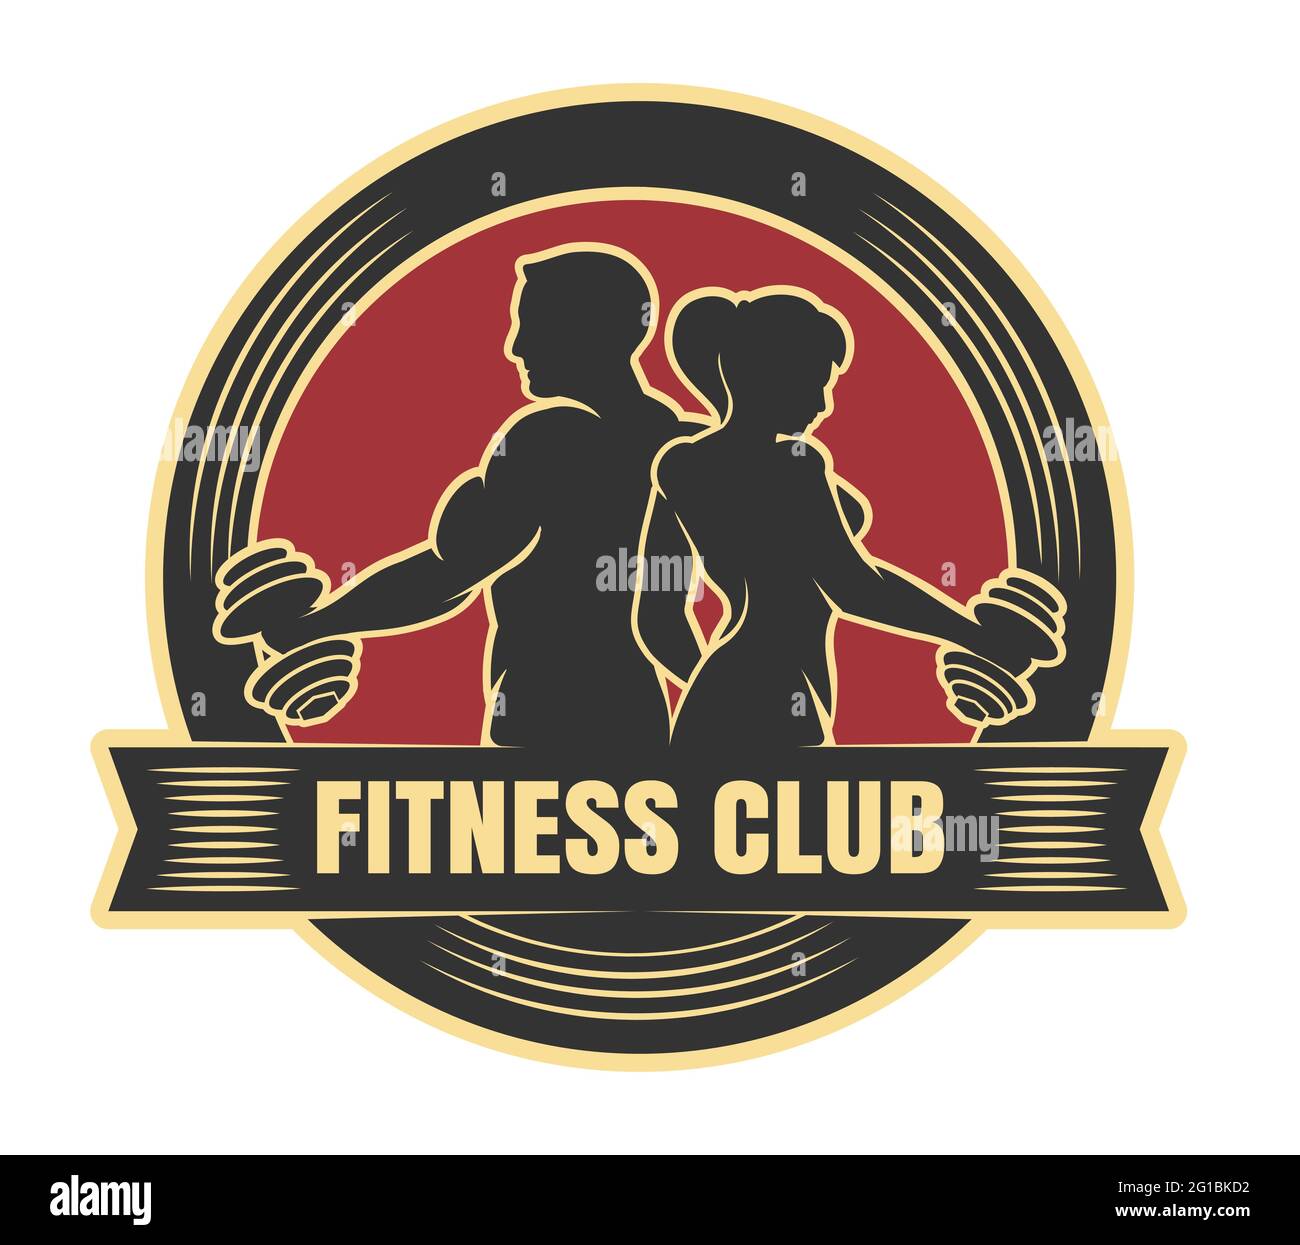 Fitness Club logo stock vector. Illustration of emblem - 115039443